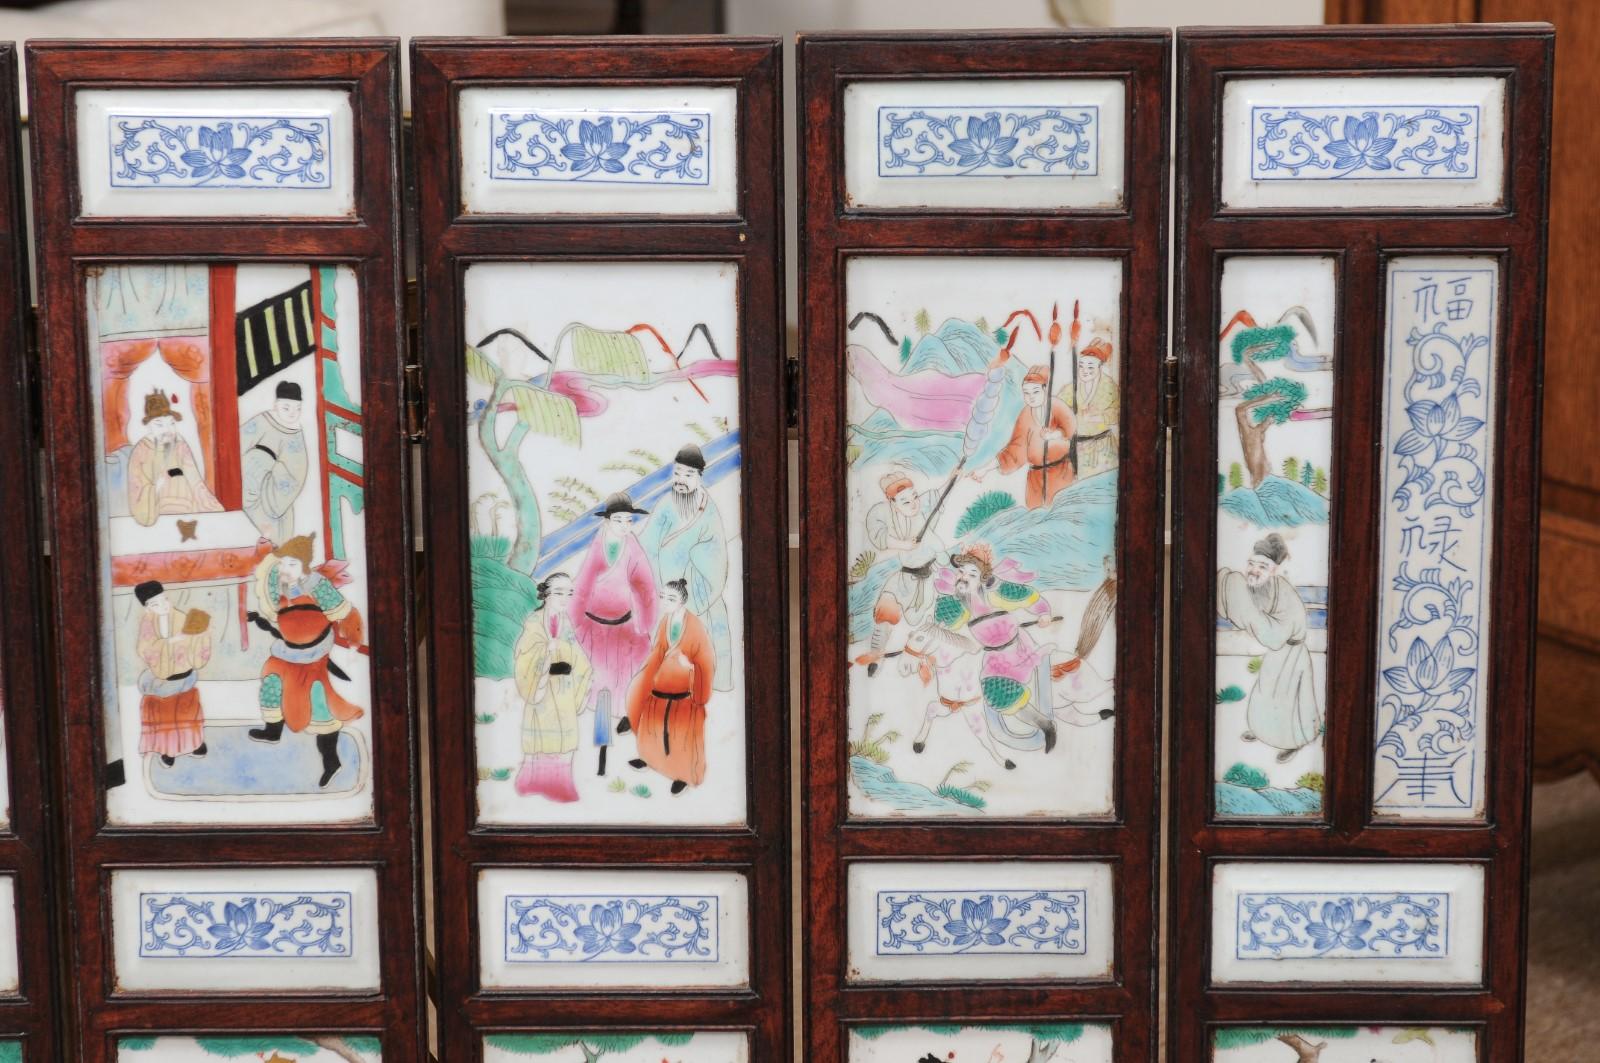 8-Panel Framed Porcelain Tile Screen, 19th Century Chinese Export For Sale 4